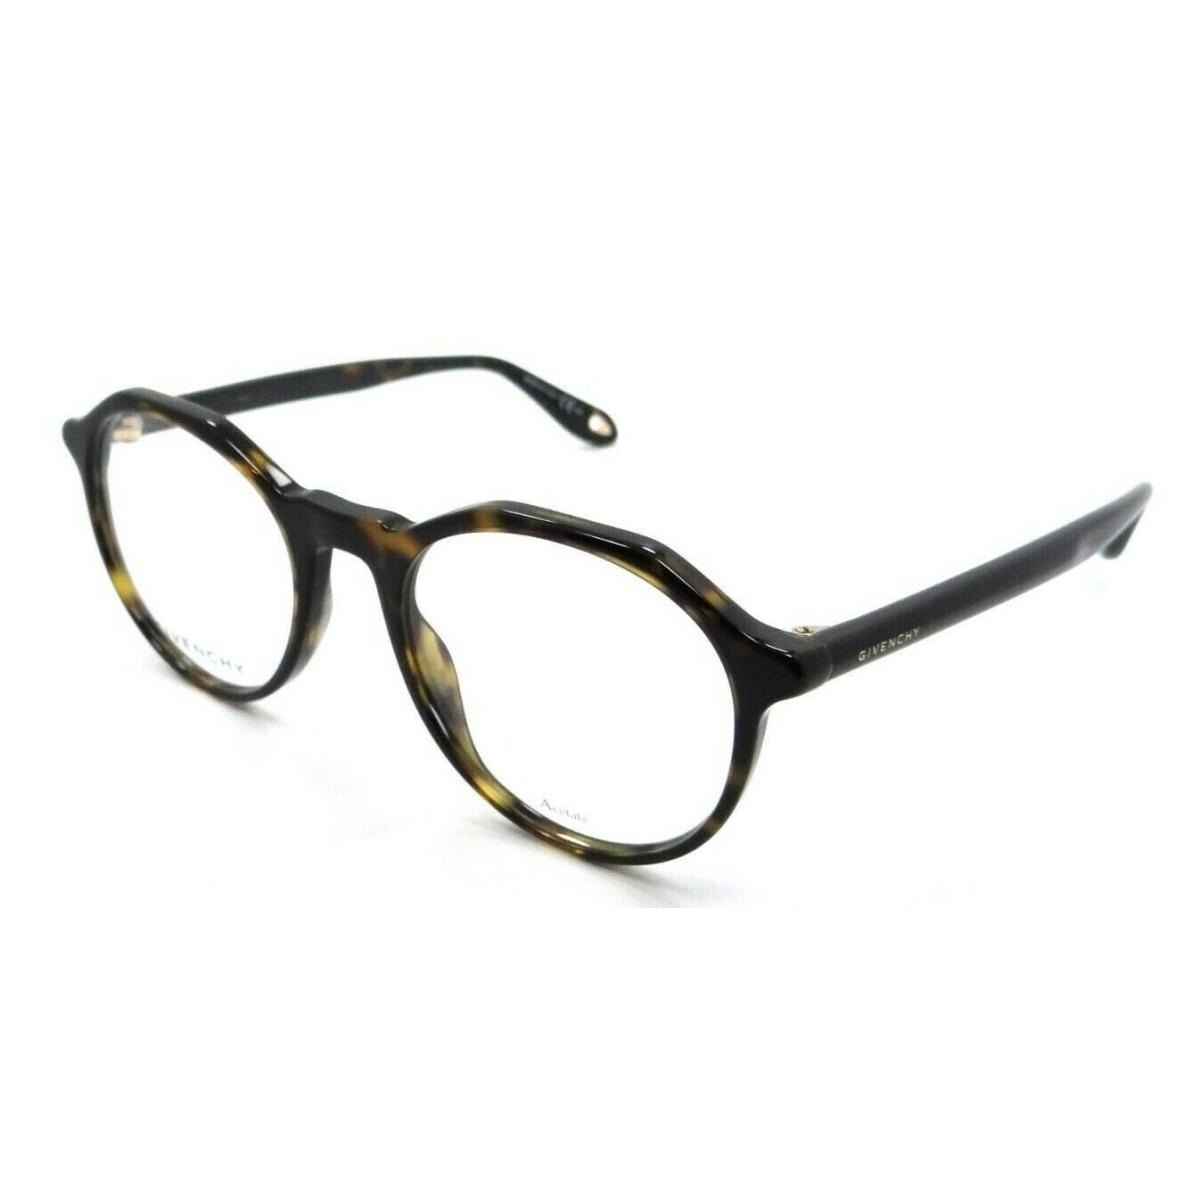 Givenchy Eyeglasses Frames GV 0085 086 49-19-145 Dark Havana Made in Italy